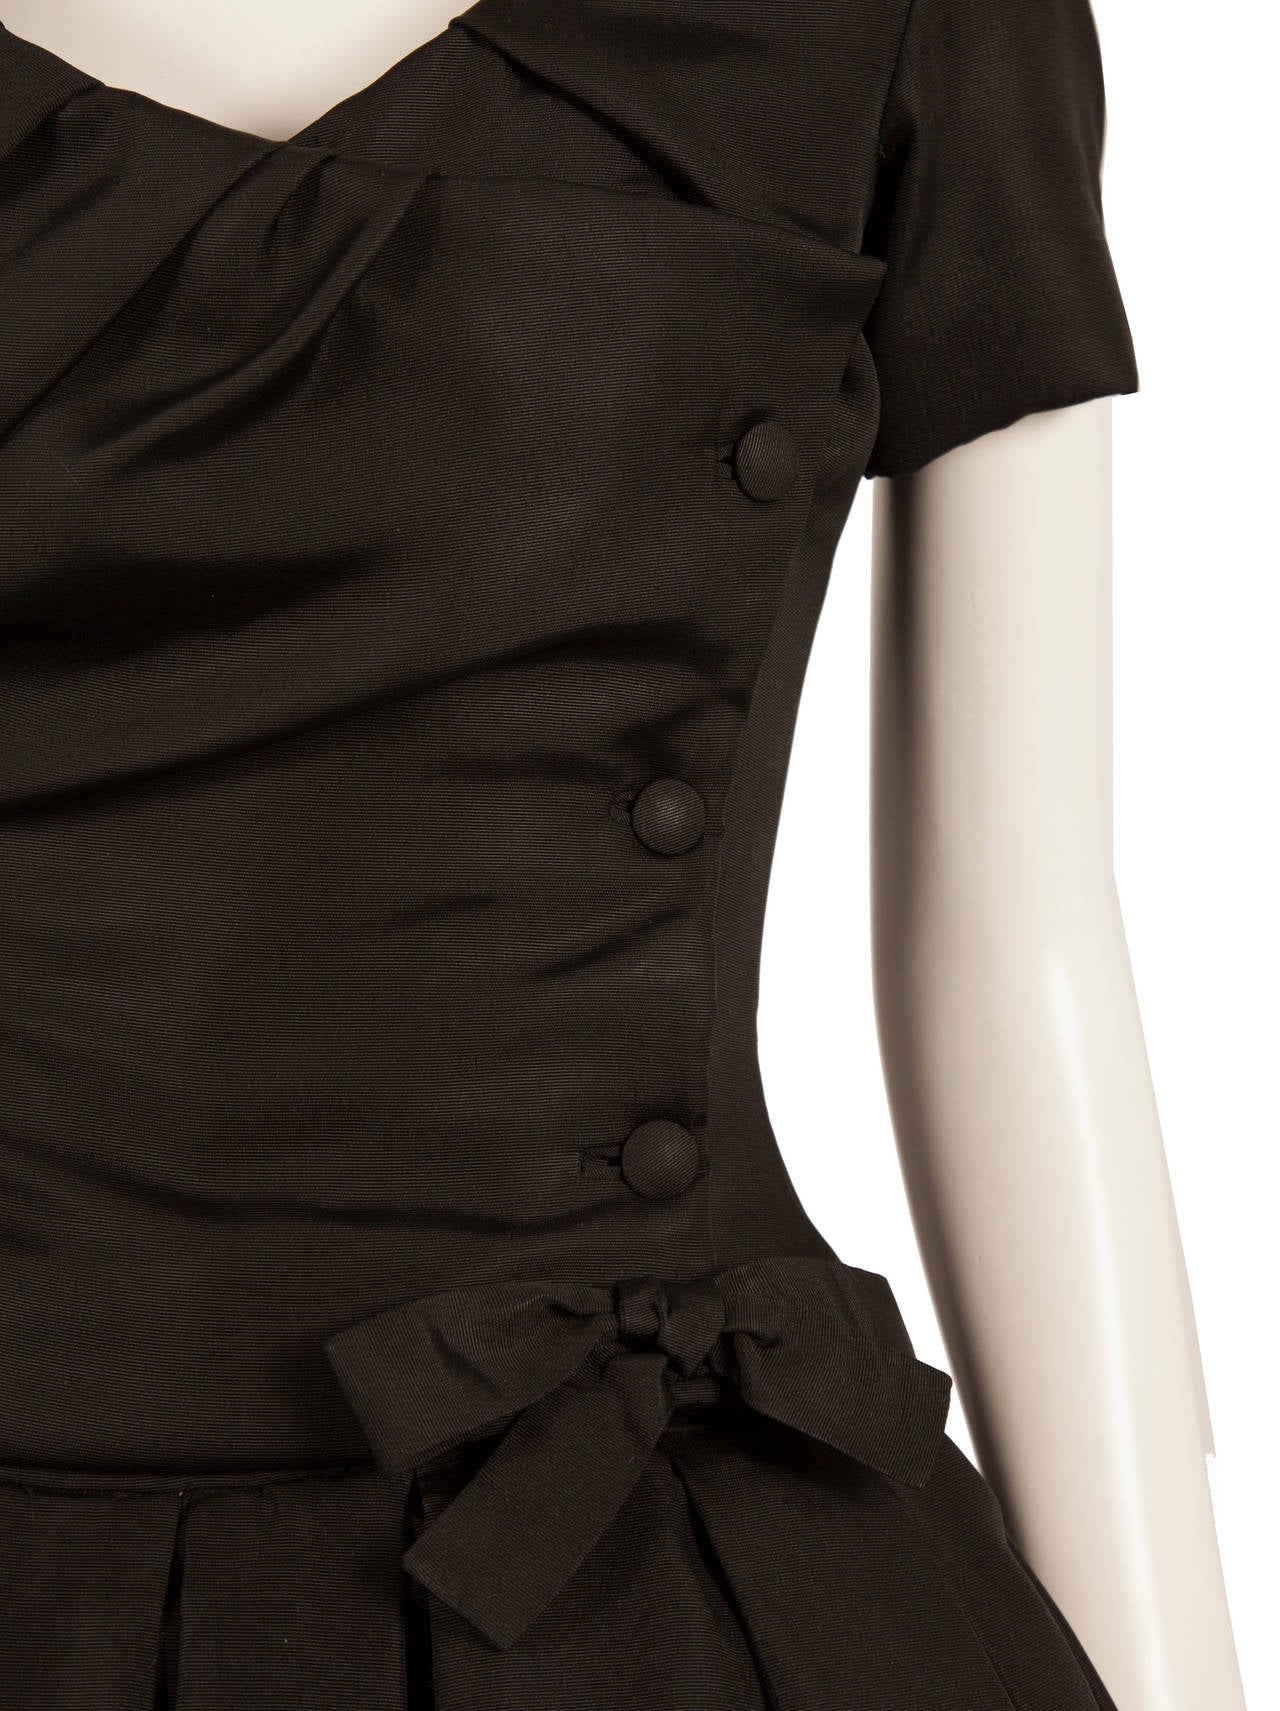 Dior haute couture black silk dress, autumn Winter 1954 In New Condition For Sale In London, GB